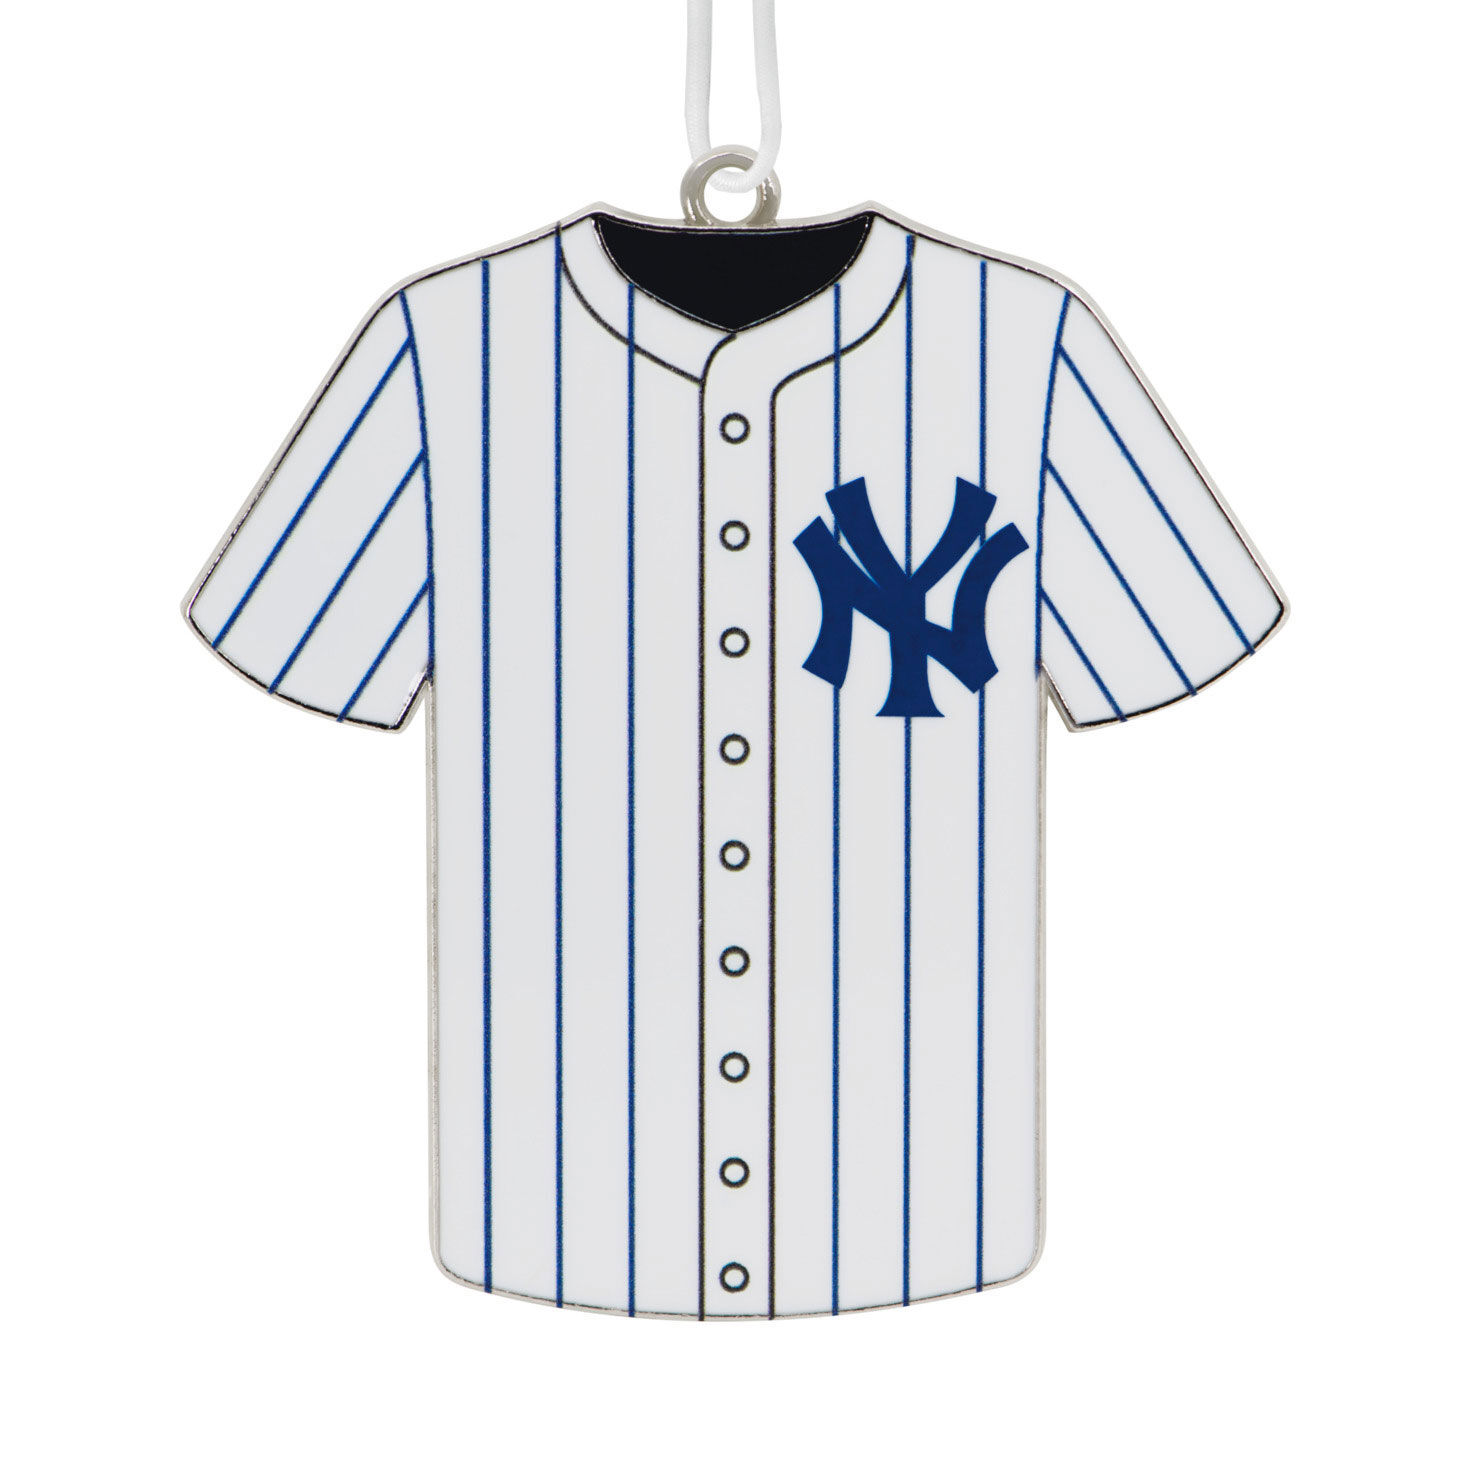 new yorker baseball jersey